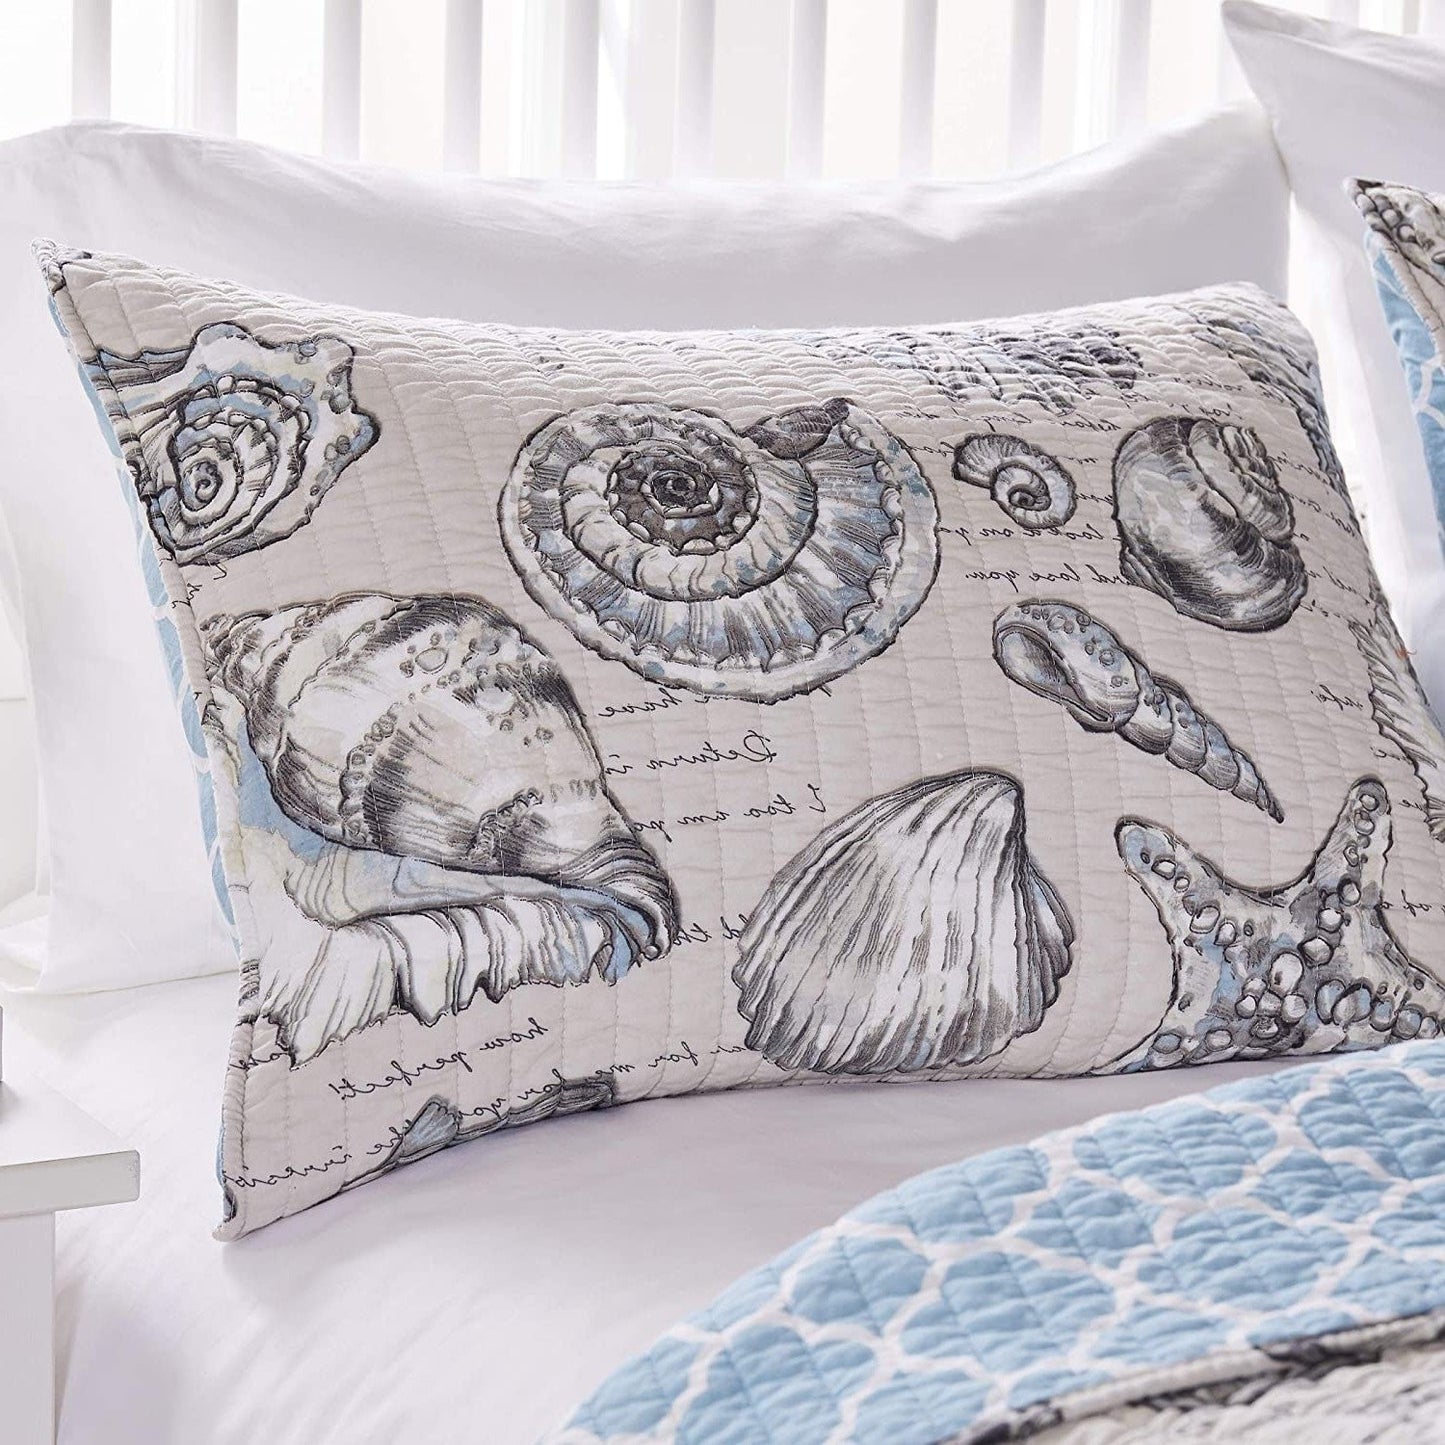 Bedroom > Quilts & Blankets - Twin/Twin XL Size 2 Piece Microfiber Beach Shells Coastal Reversible Quilt Set